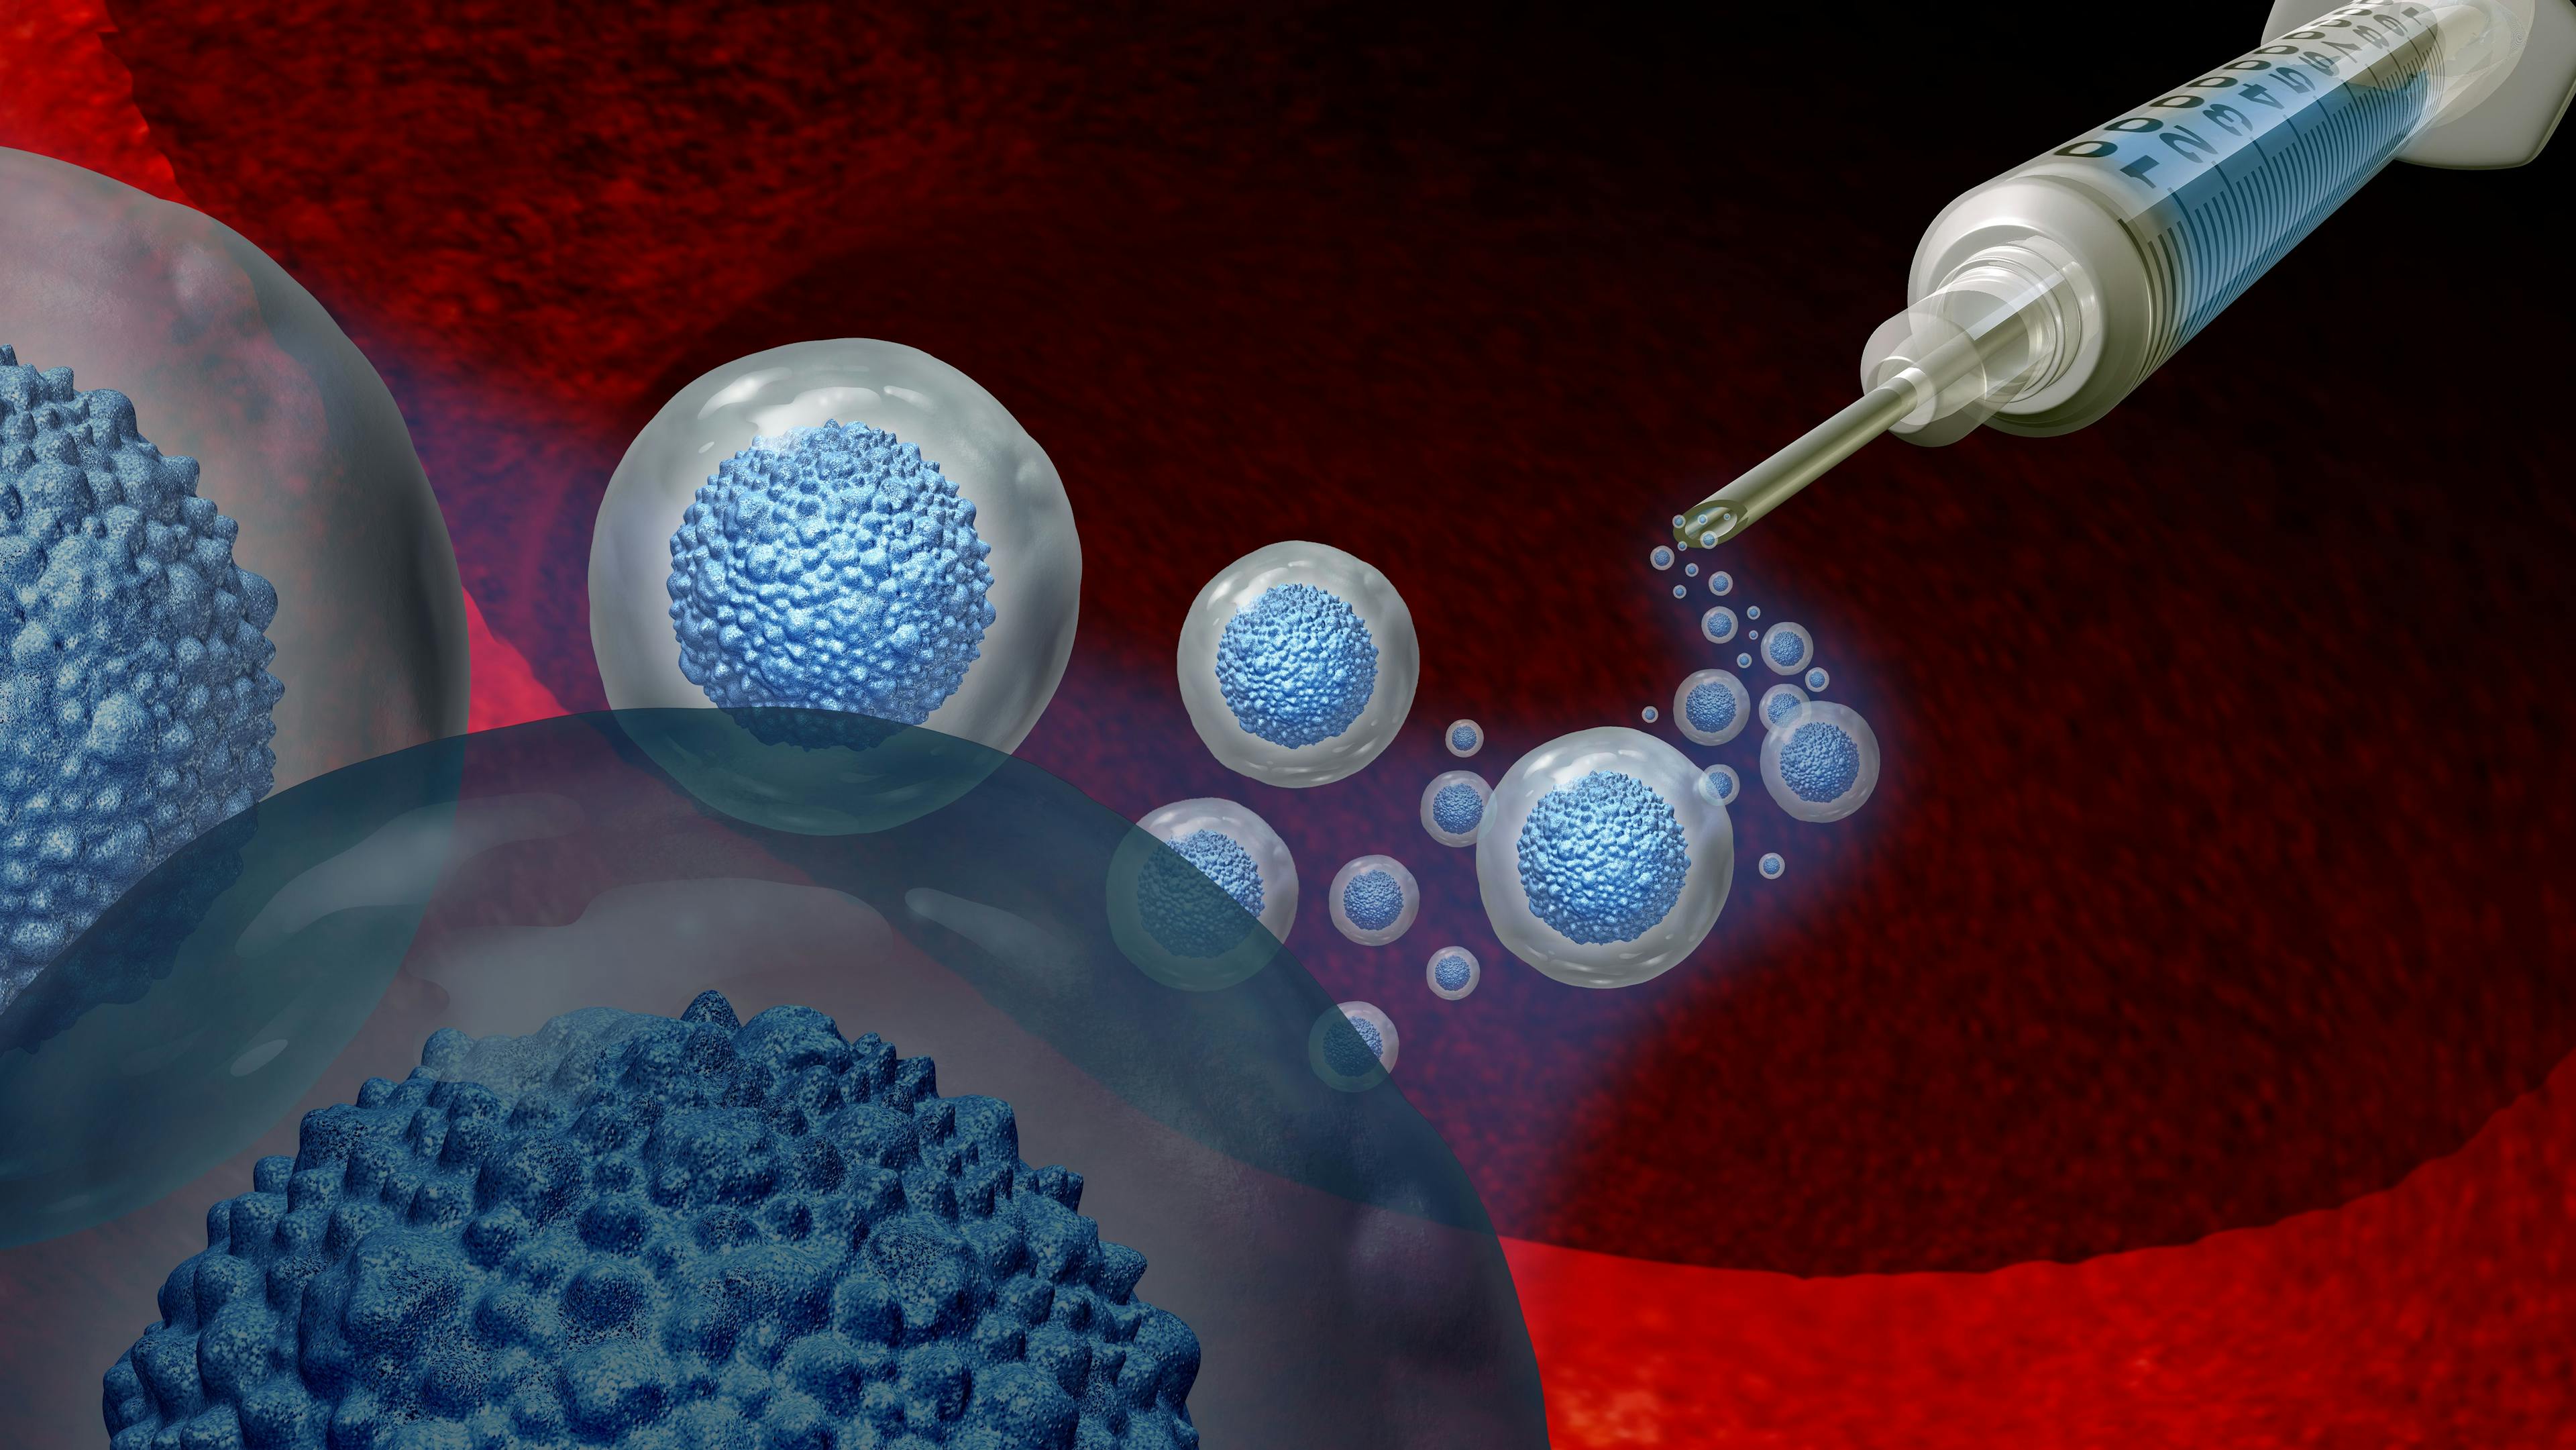 Stem Cell Transplant Model | image credit: freshidea - stock.adobe.com